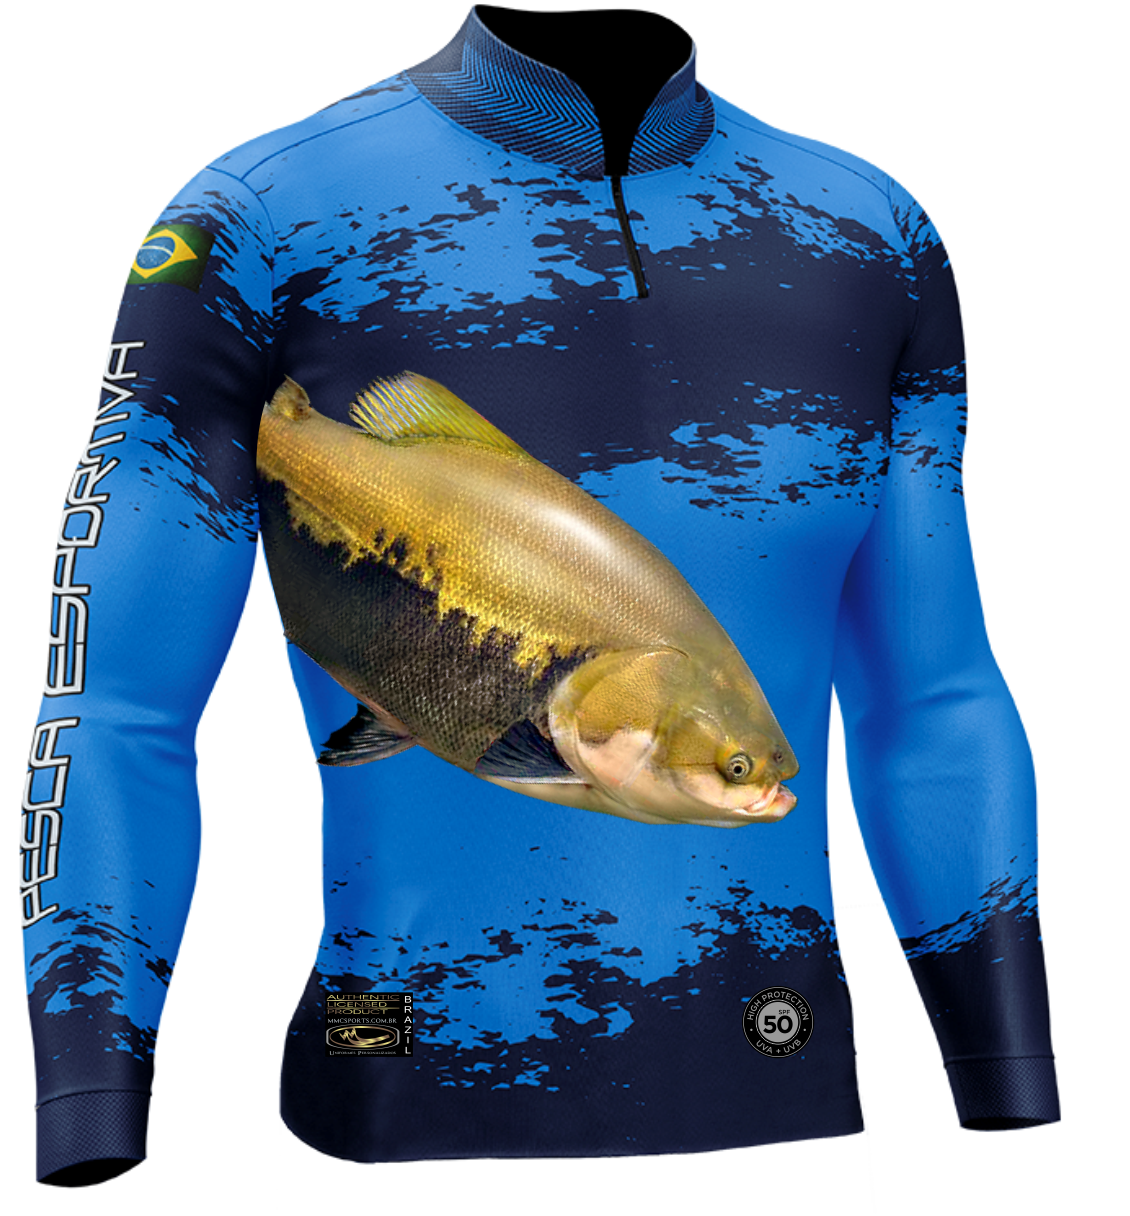 Evento Misericordioso reflujo 11 - Camisa de Pesca Personalizada Masculina Tamba Azul Marinho - Loja MMC  Sports